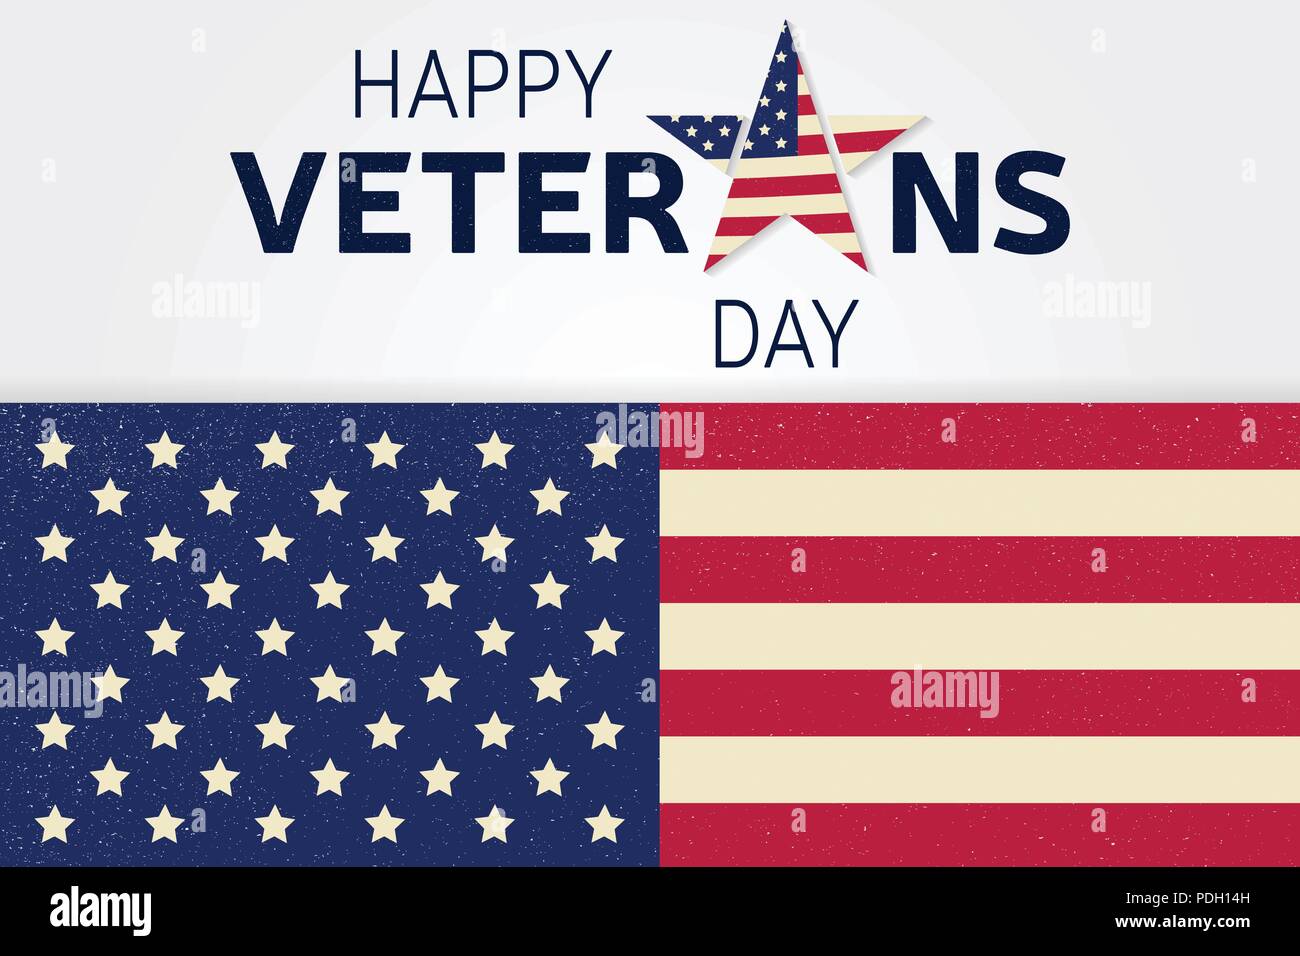 Veterans Day Grußkarte. Ehrt alle, die dienten. Vector Illustration. Stock Vektor